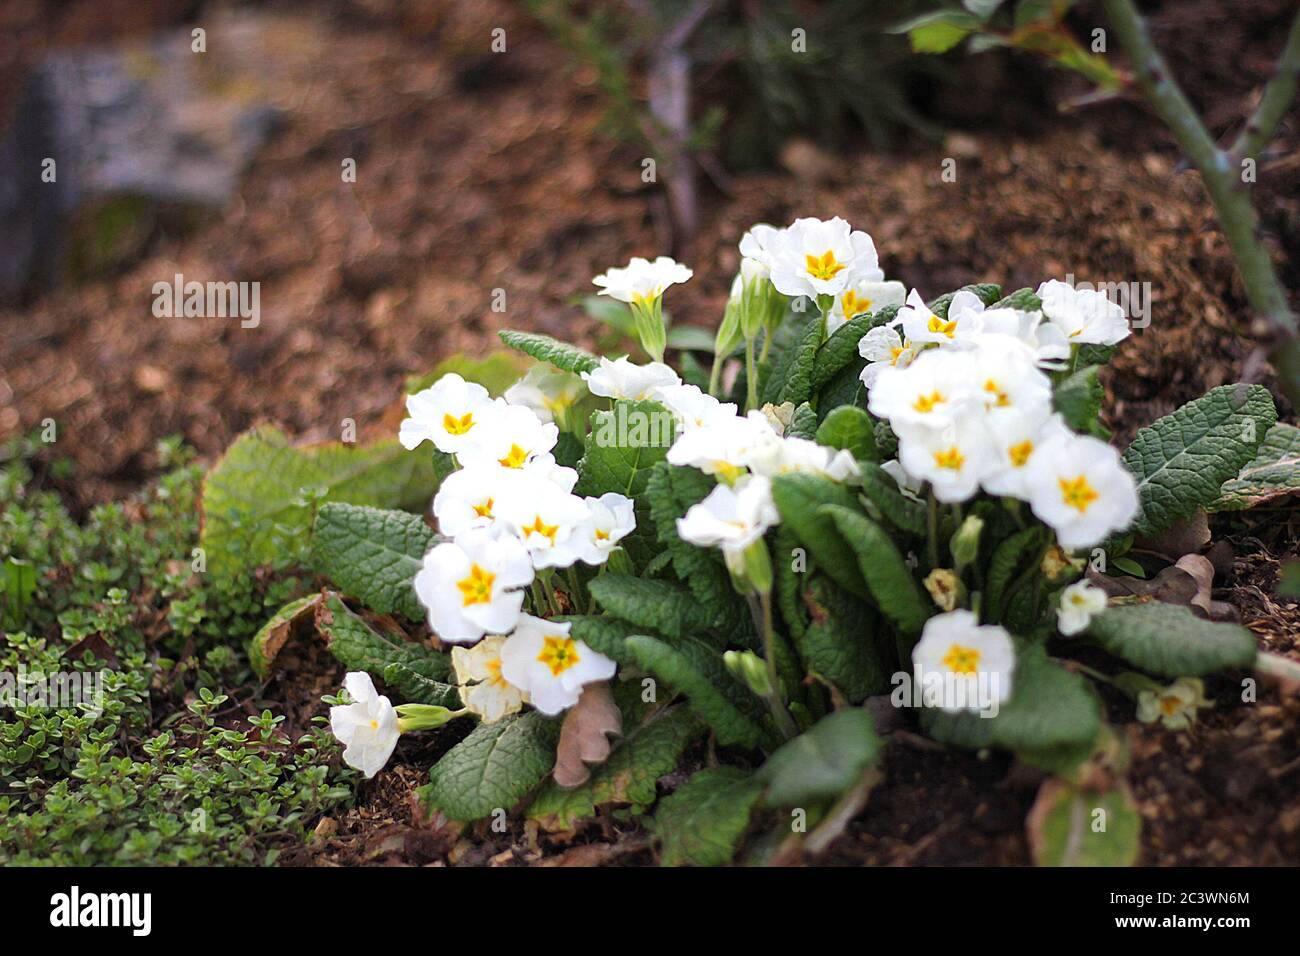 White primroses in the garden Stock Photo